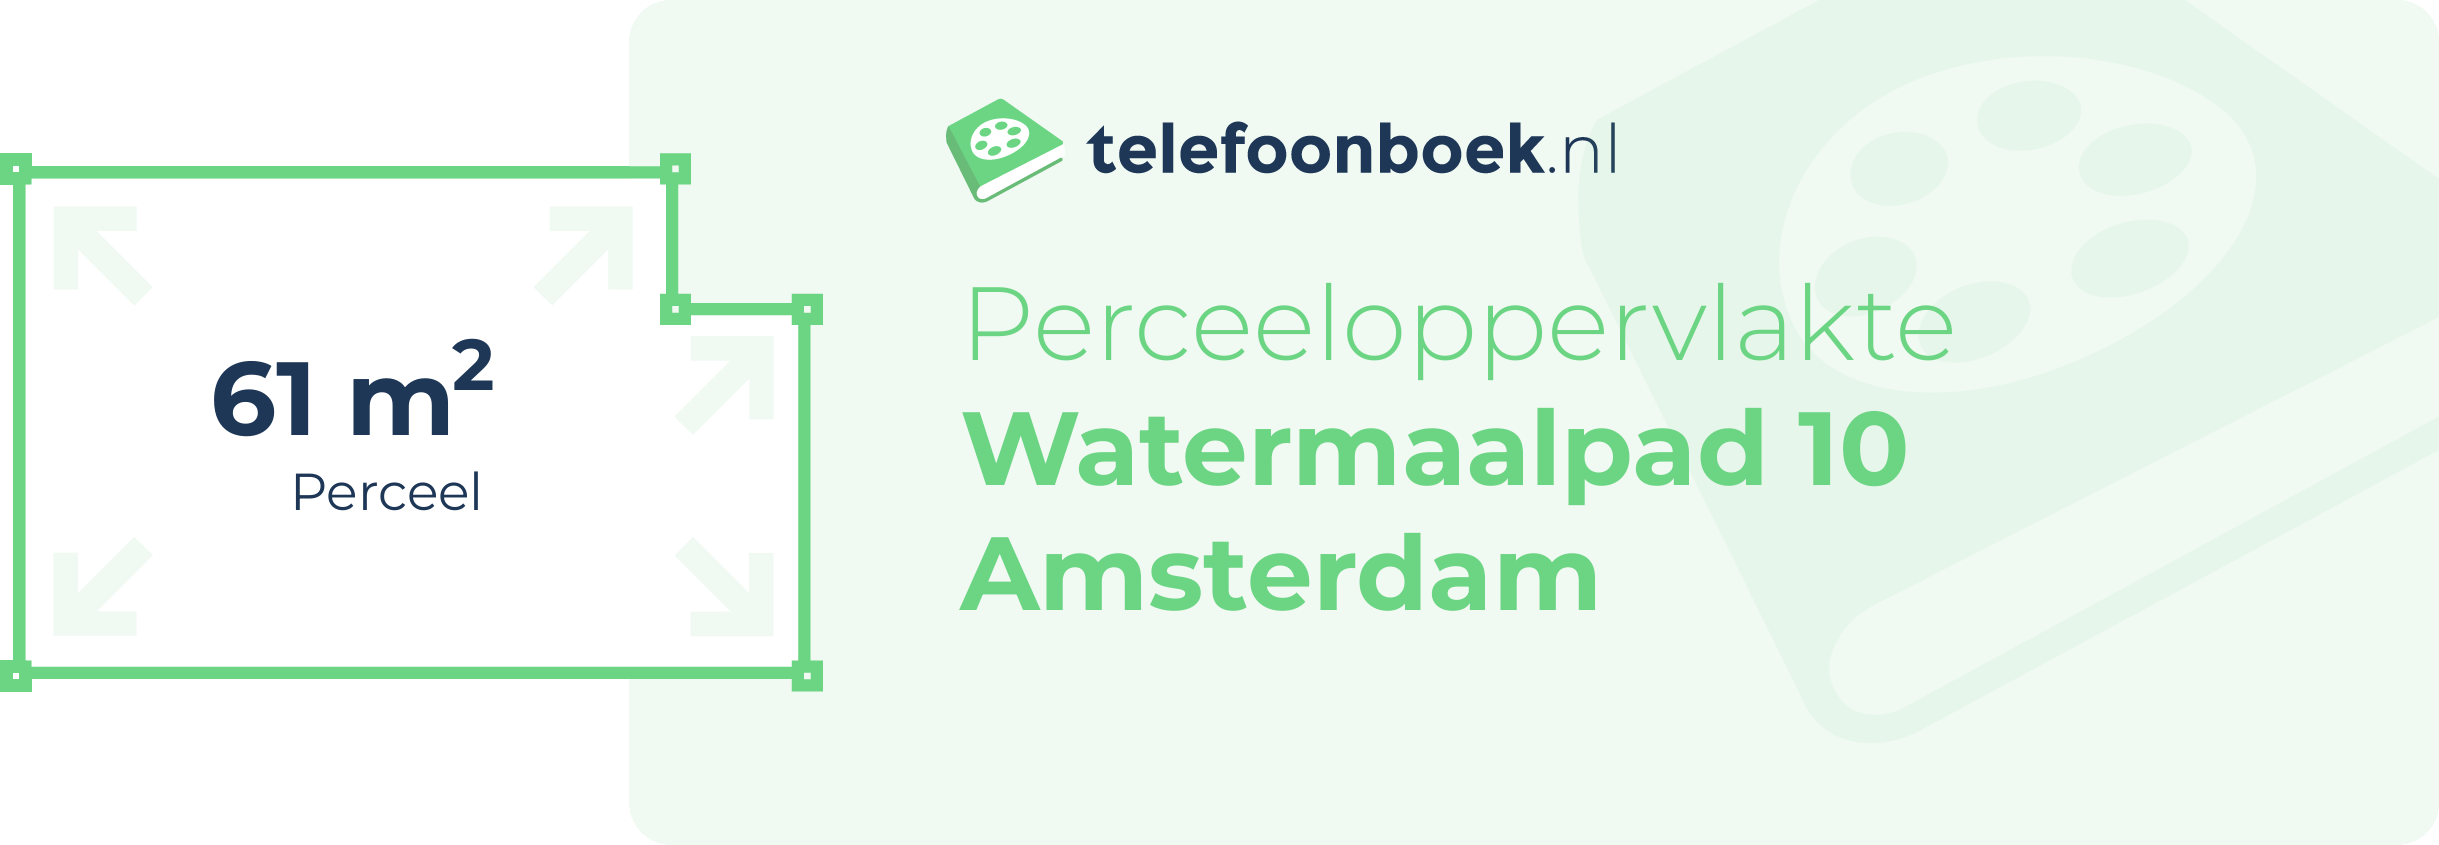 Perceeloppervlakte Watermaalpad 10 Amsterdam